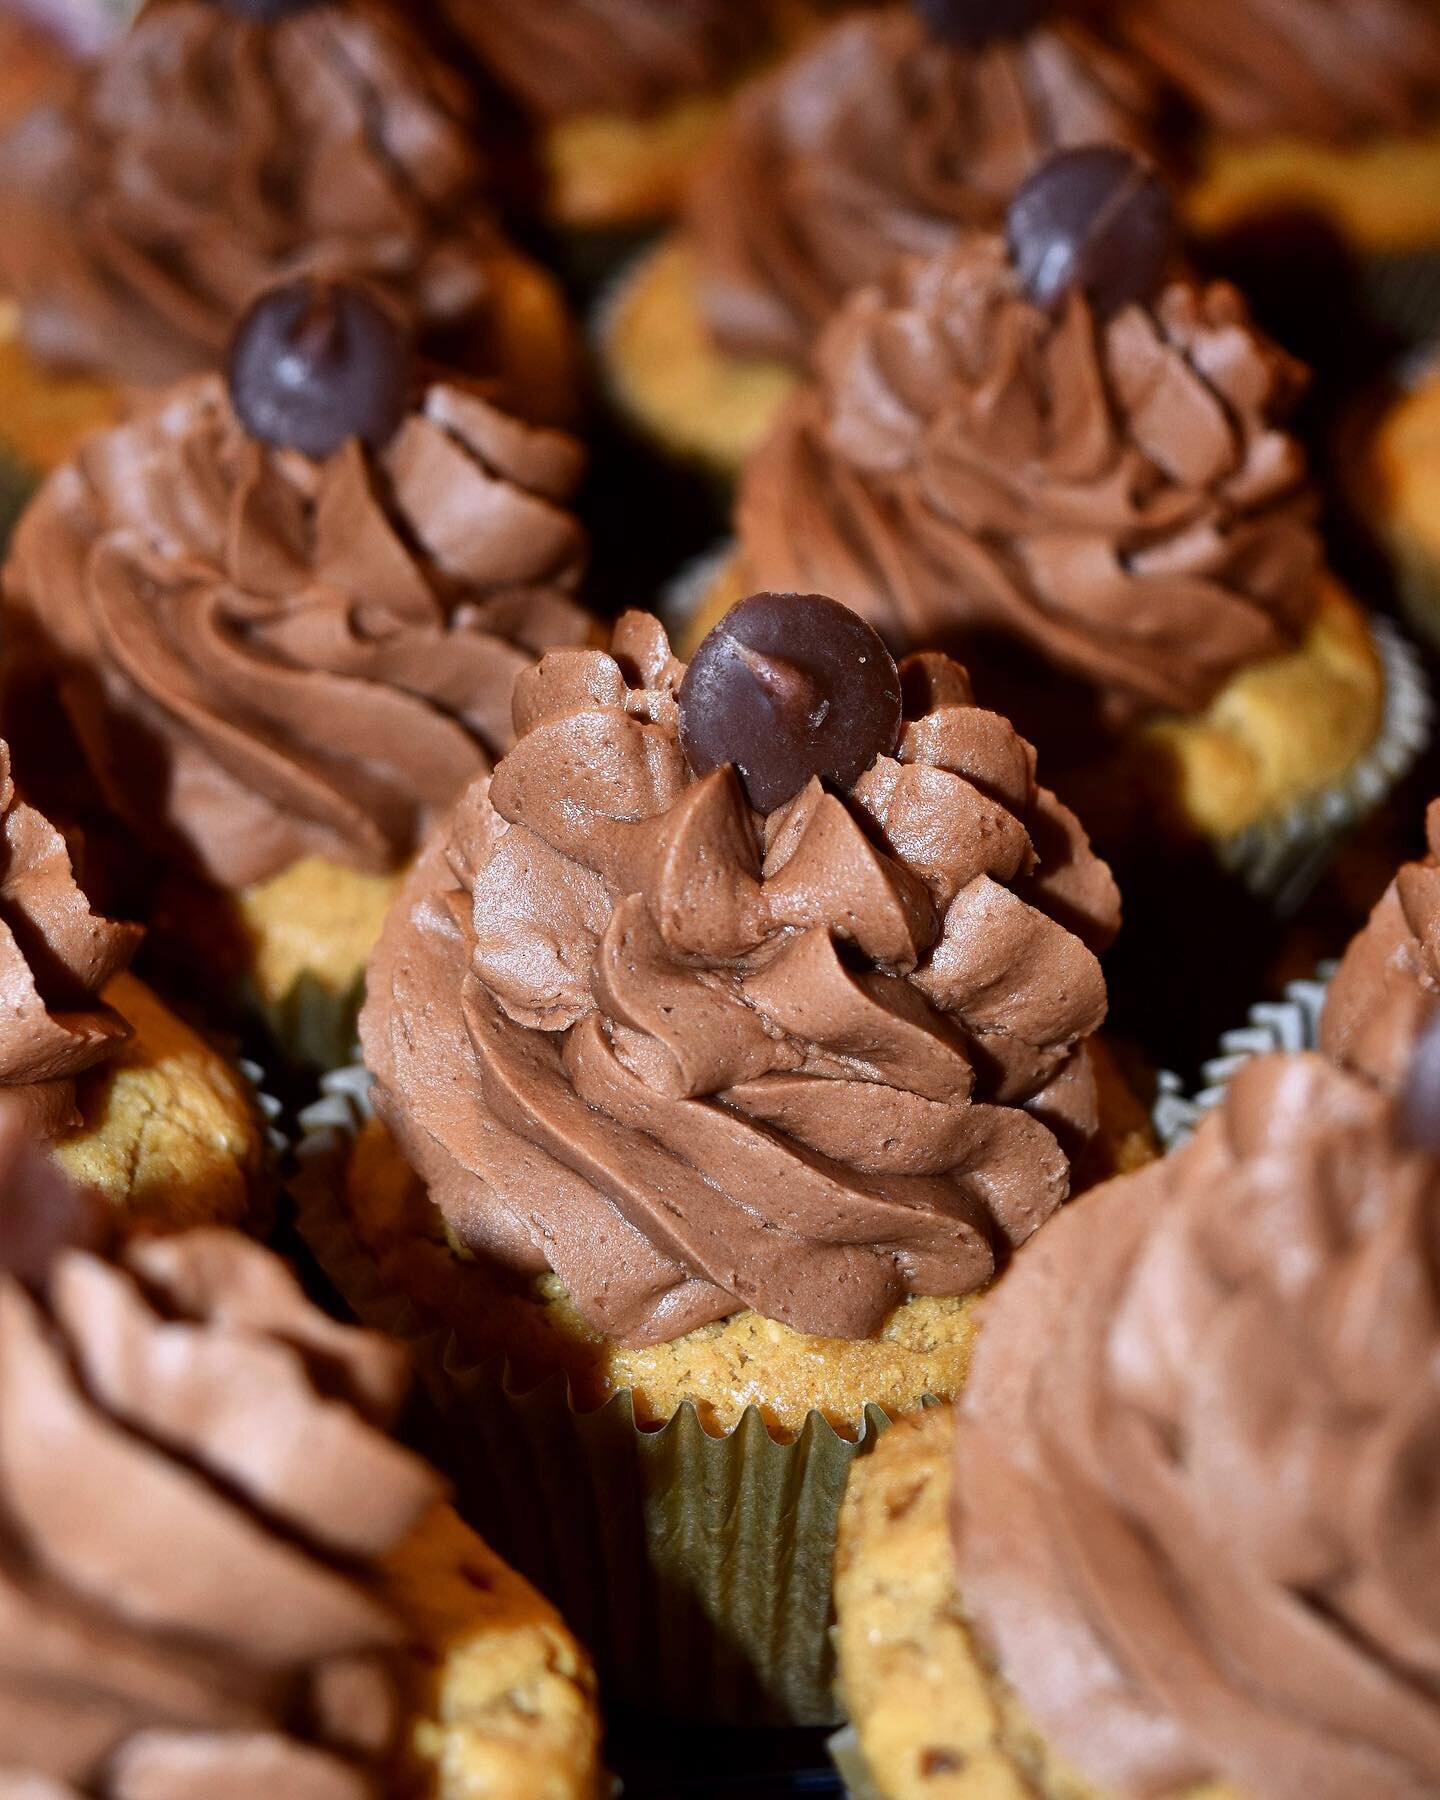 pb chocolate 🥜🍫 .
.
.
#sallysbakingaddiction #peanutbutter #peanutbutterchocolate #reeses #cupcakes #cake #frosting #dessert